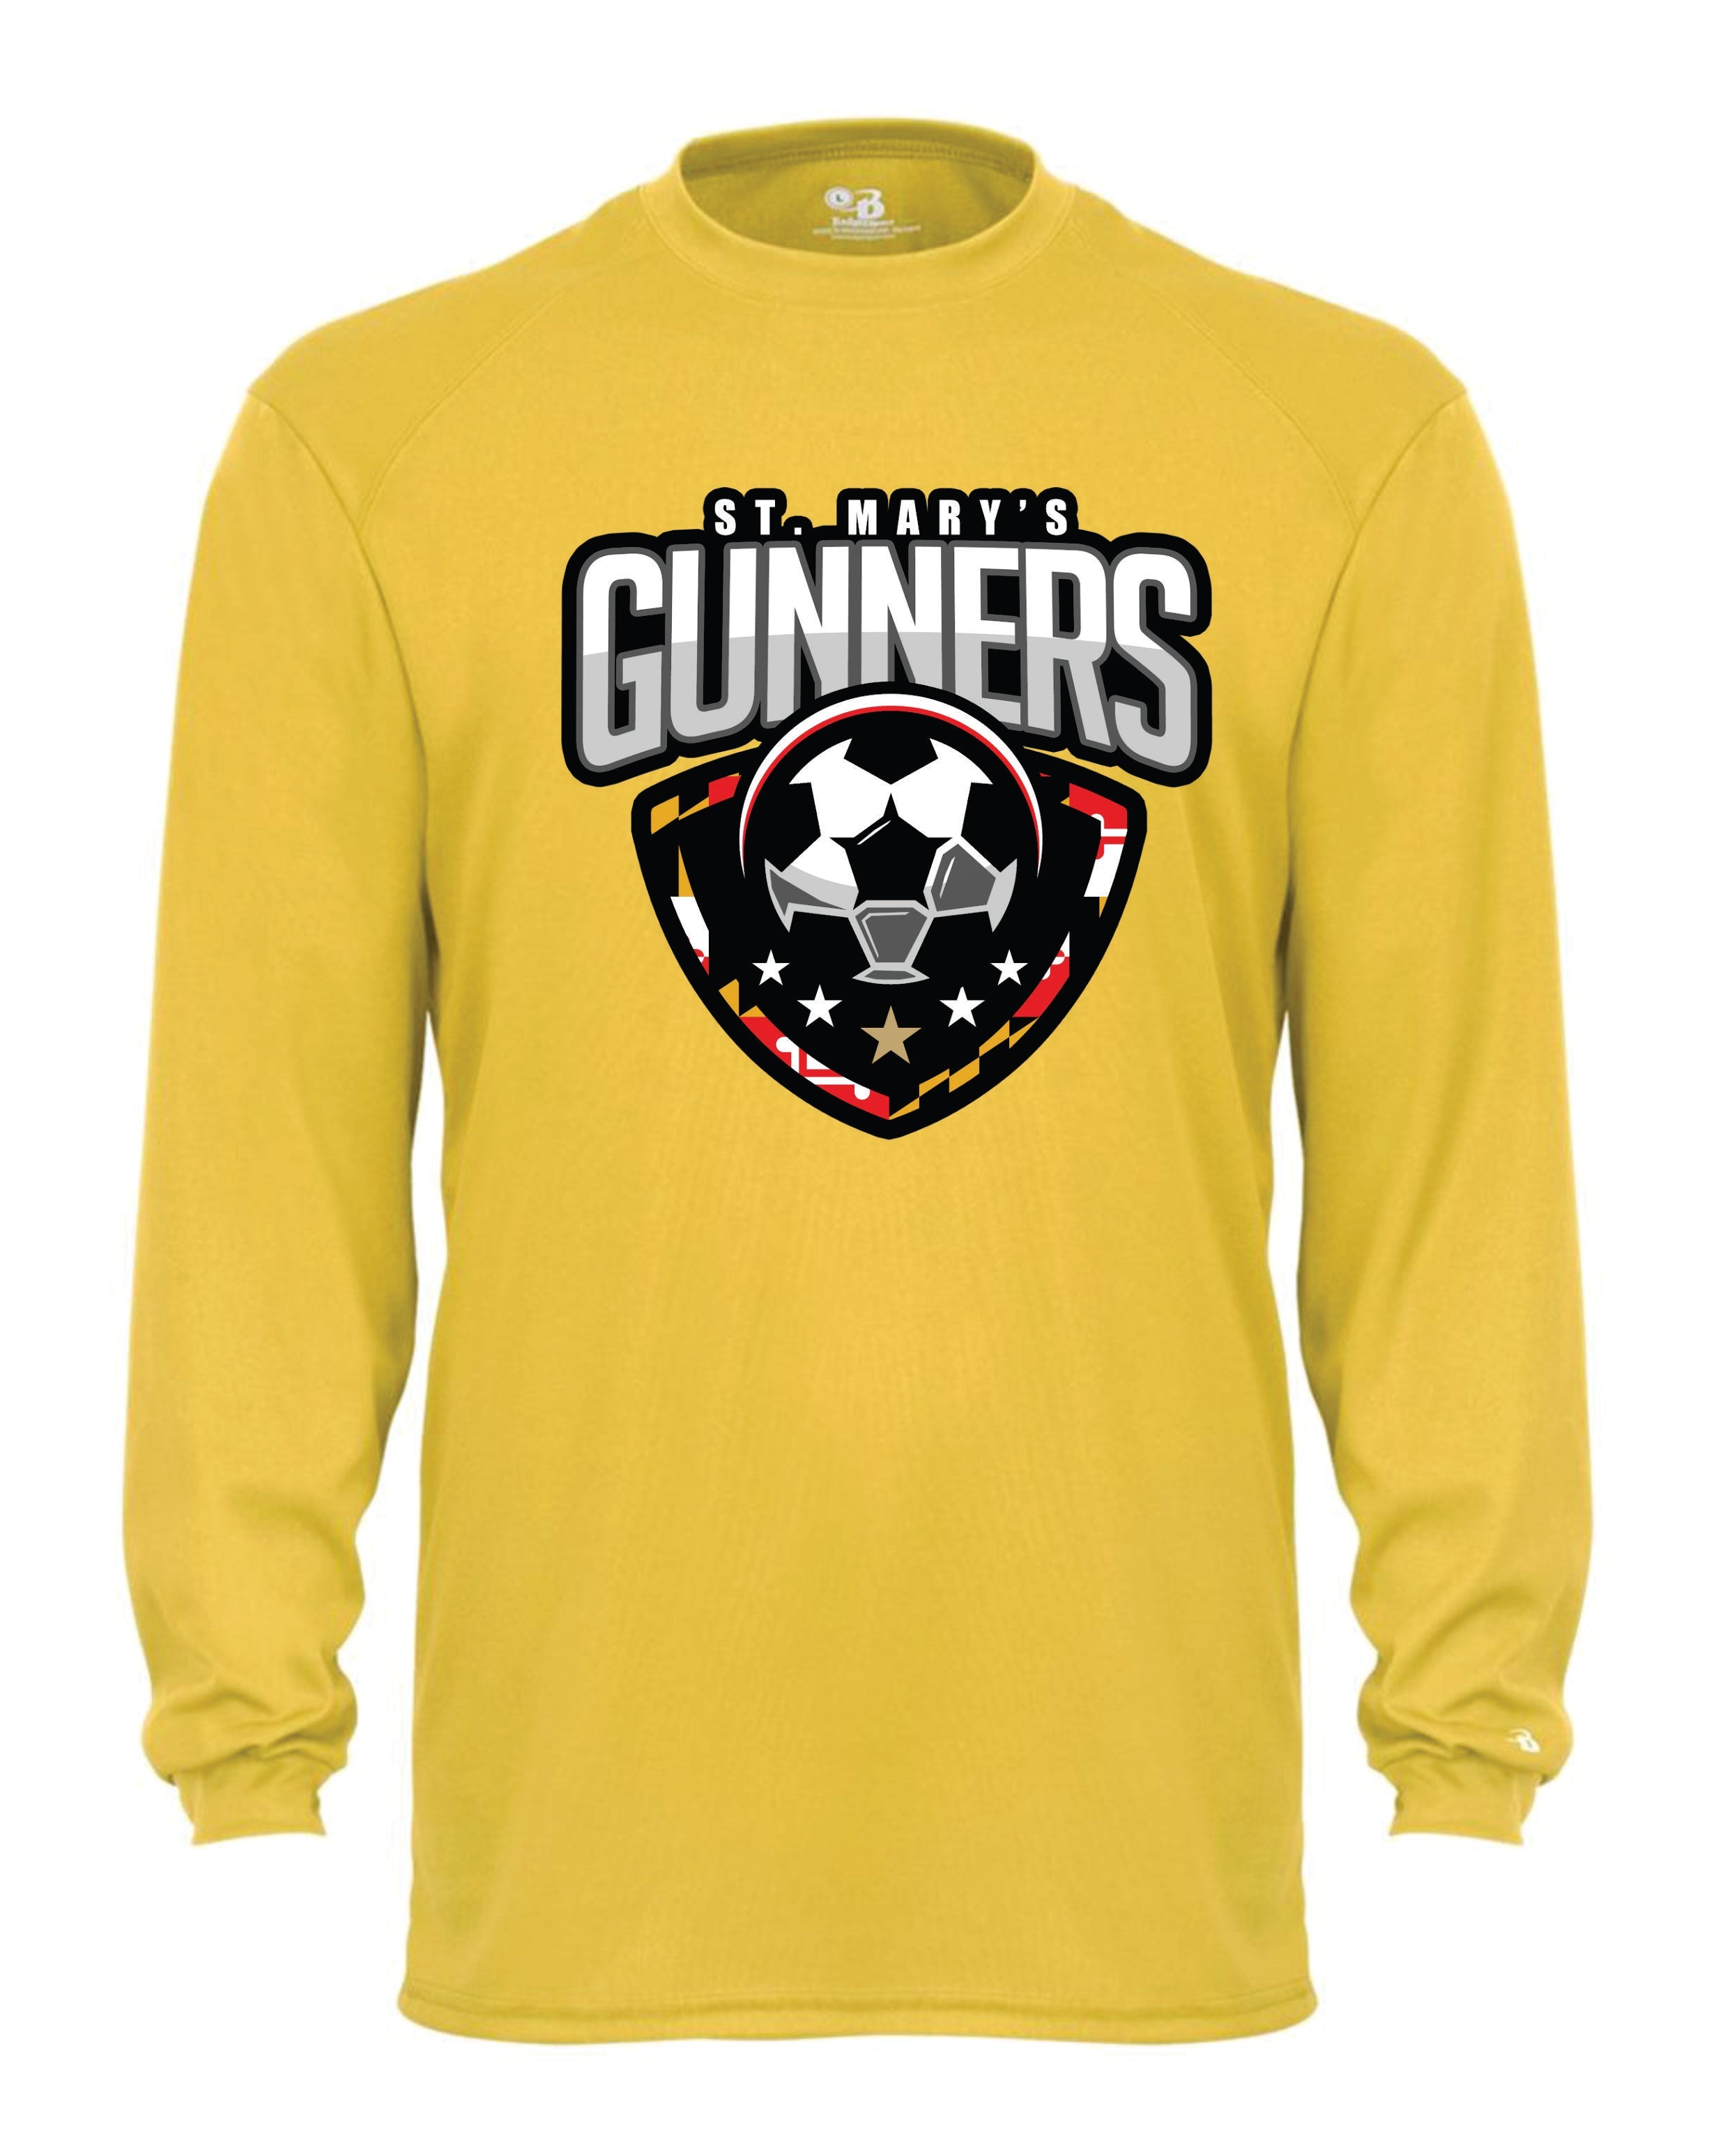 Gunners Long Sleeve Badger Dri Fit Shirt-YOUTH